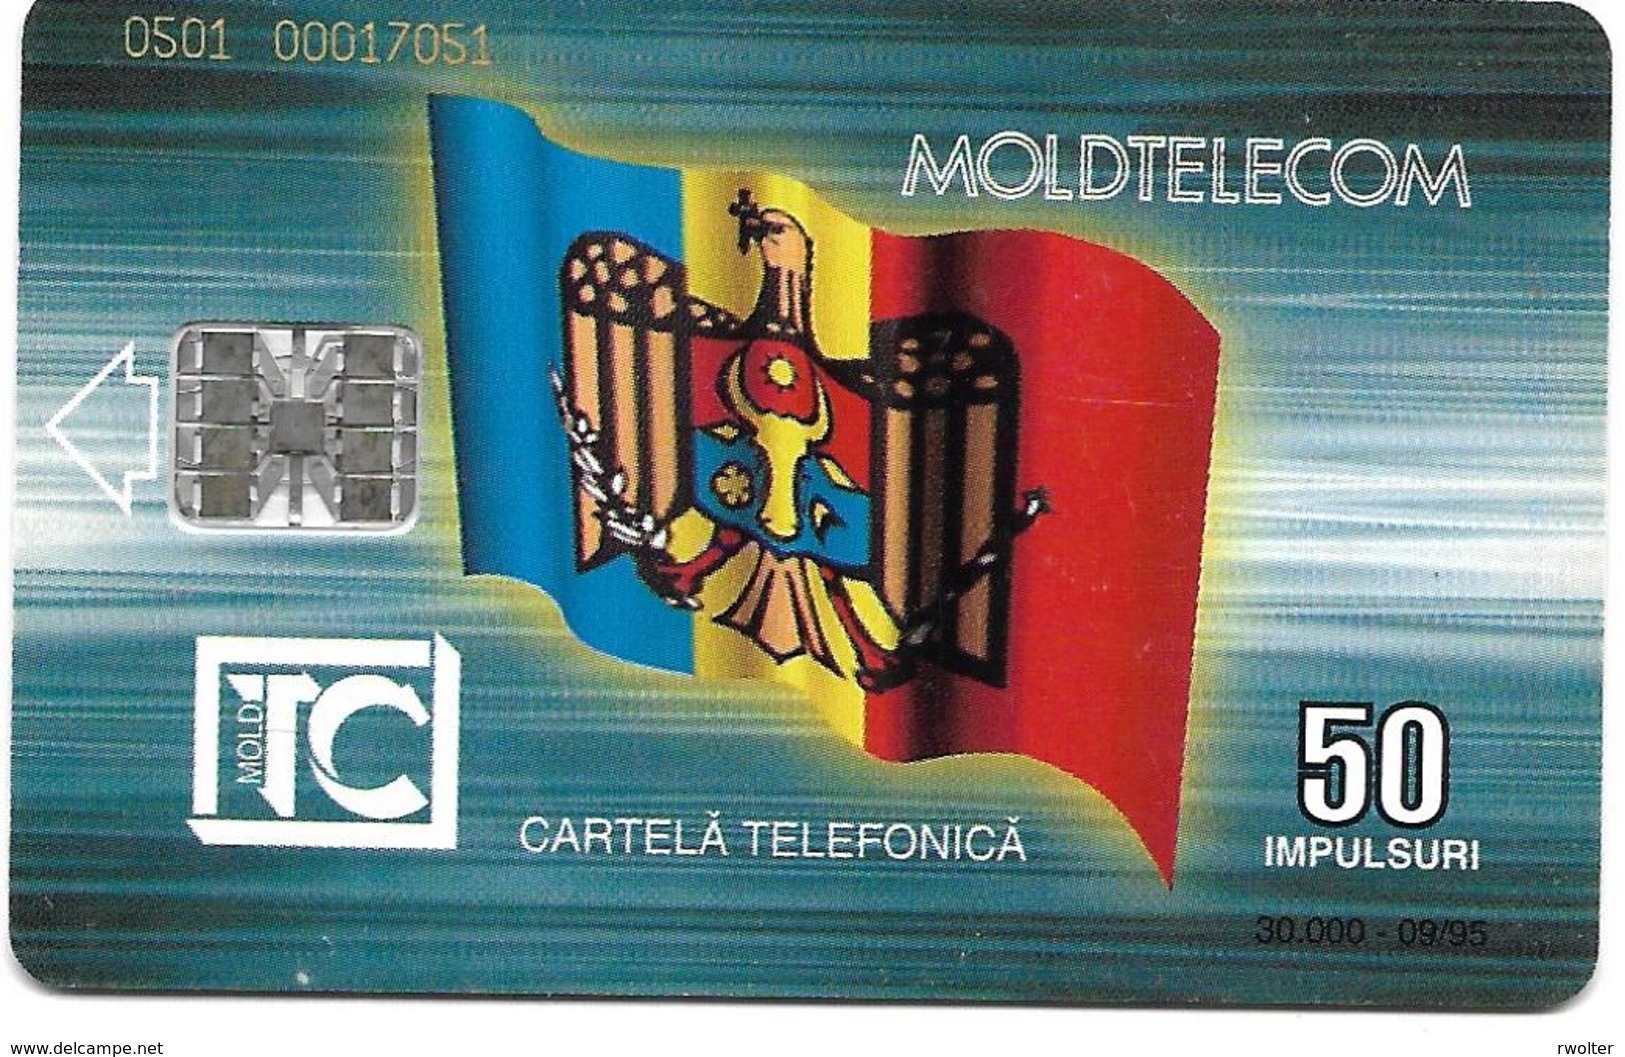 @+ Moldavie - Telecarte à Puce 50U - Puce SC7 - 30 000ex - 09/95 - Ref : MOL-M-05 - Moldova